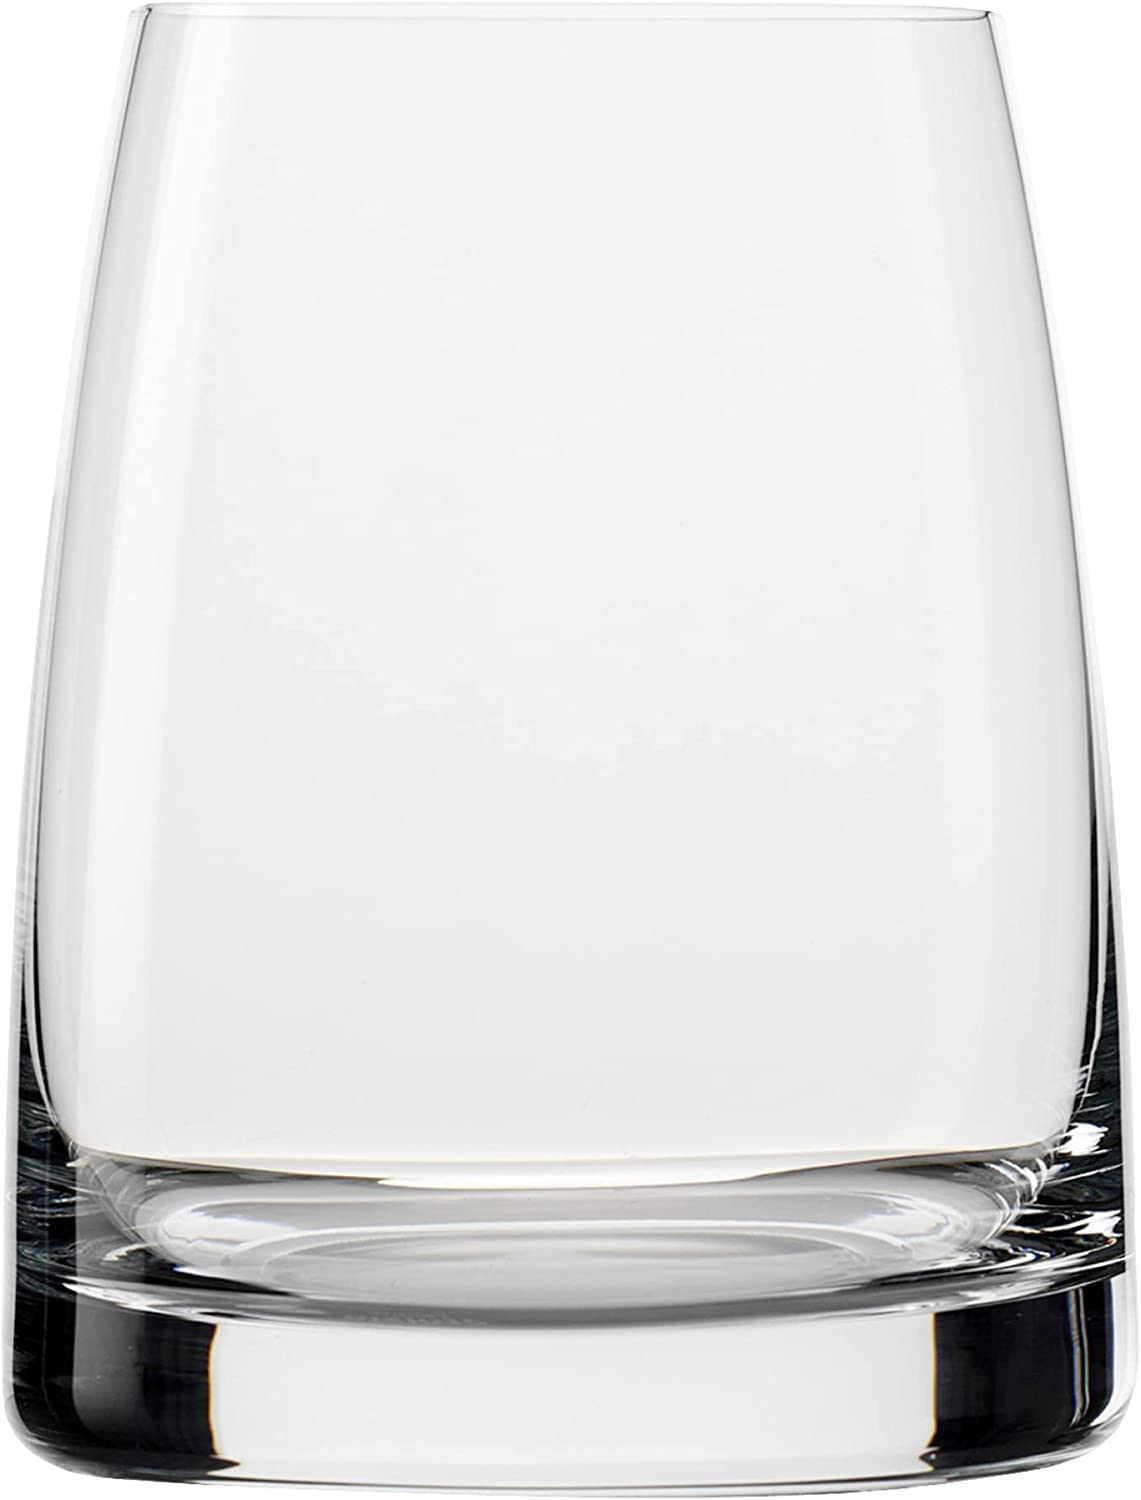 Stölzle Lausitz Stãƒâ ¶ Lzle Lausitz 325ml Lead Free Experience Whiskey DOF Tumbler Crystal Glass